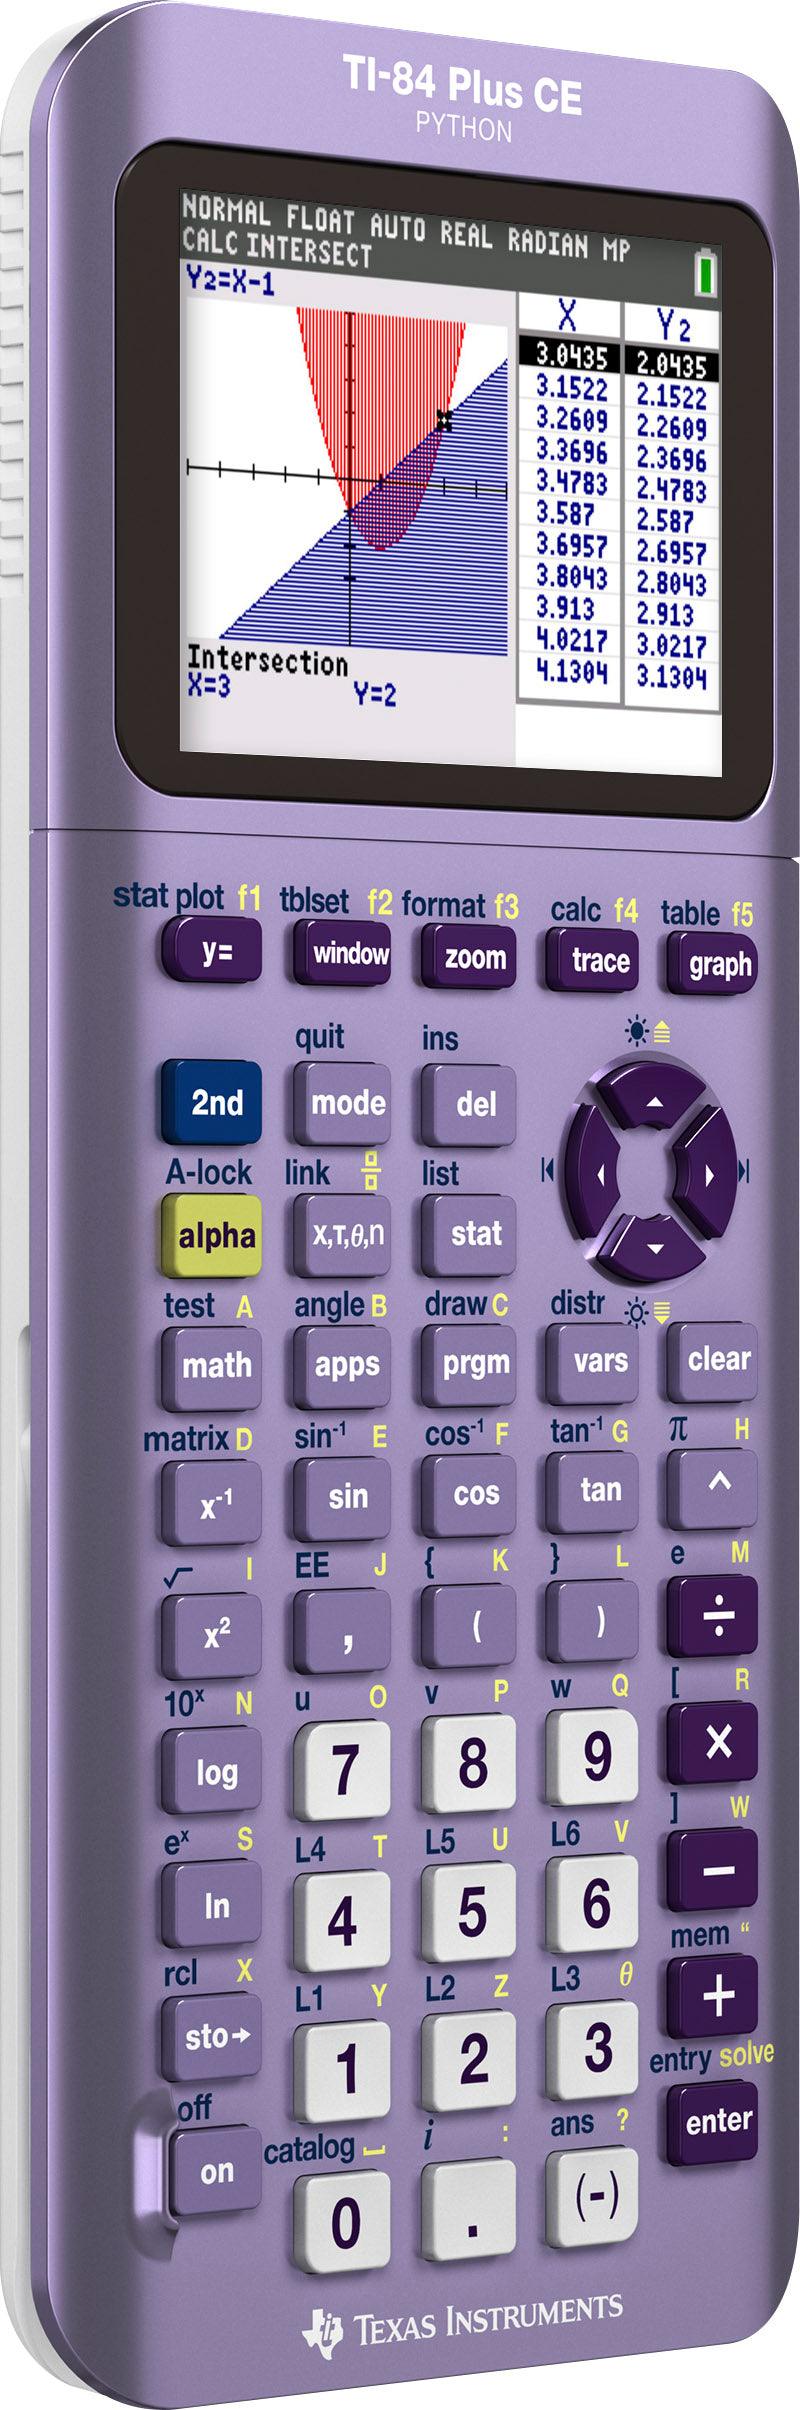 Ti-84 Plus CE Python Graphing Calculator - Infinity Iris - Underwood Distributing Co.